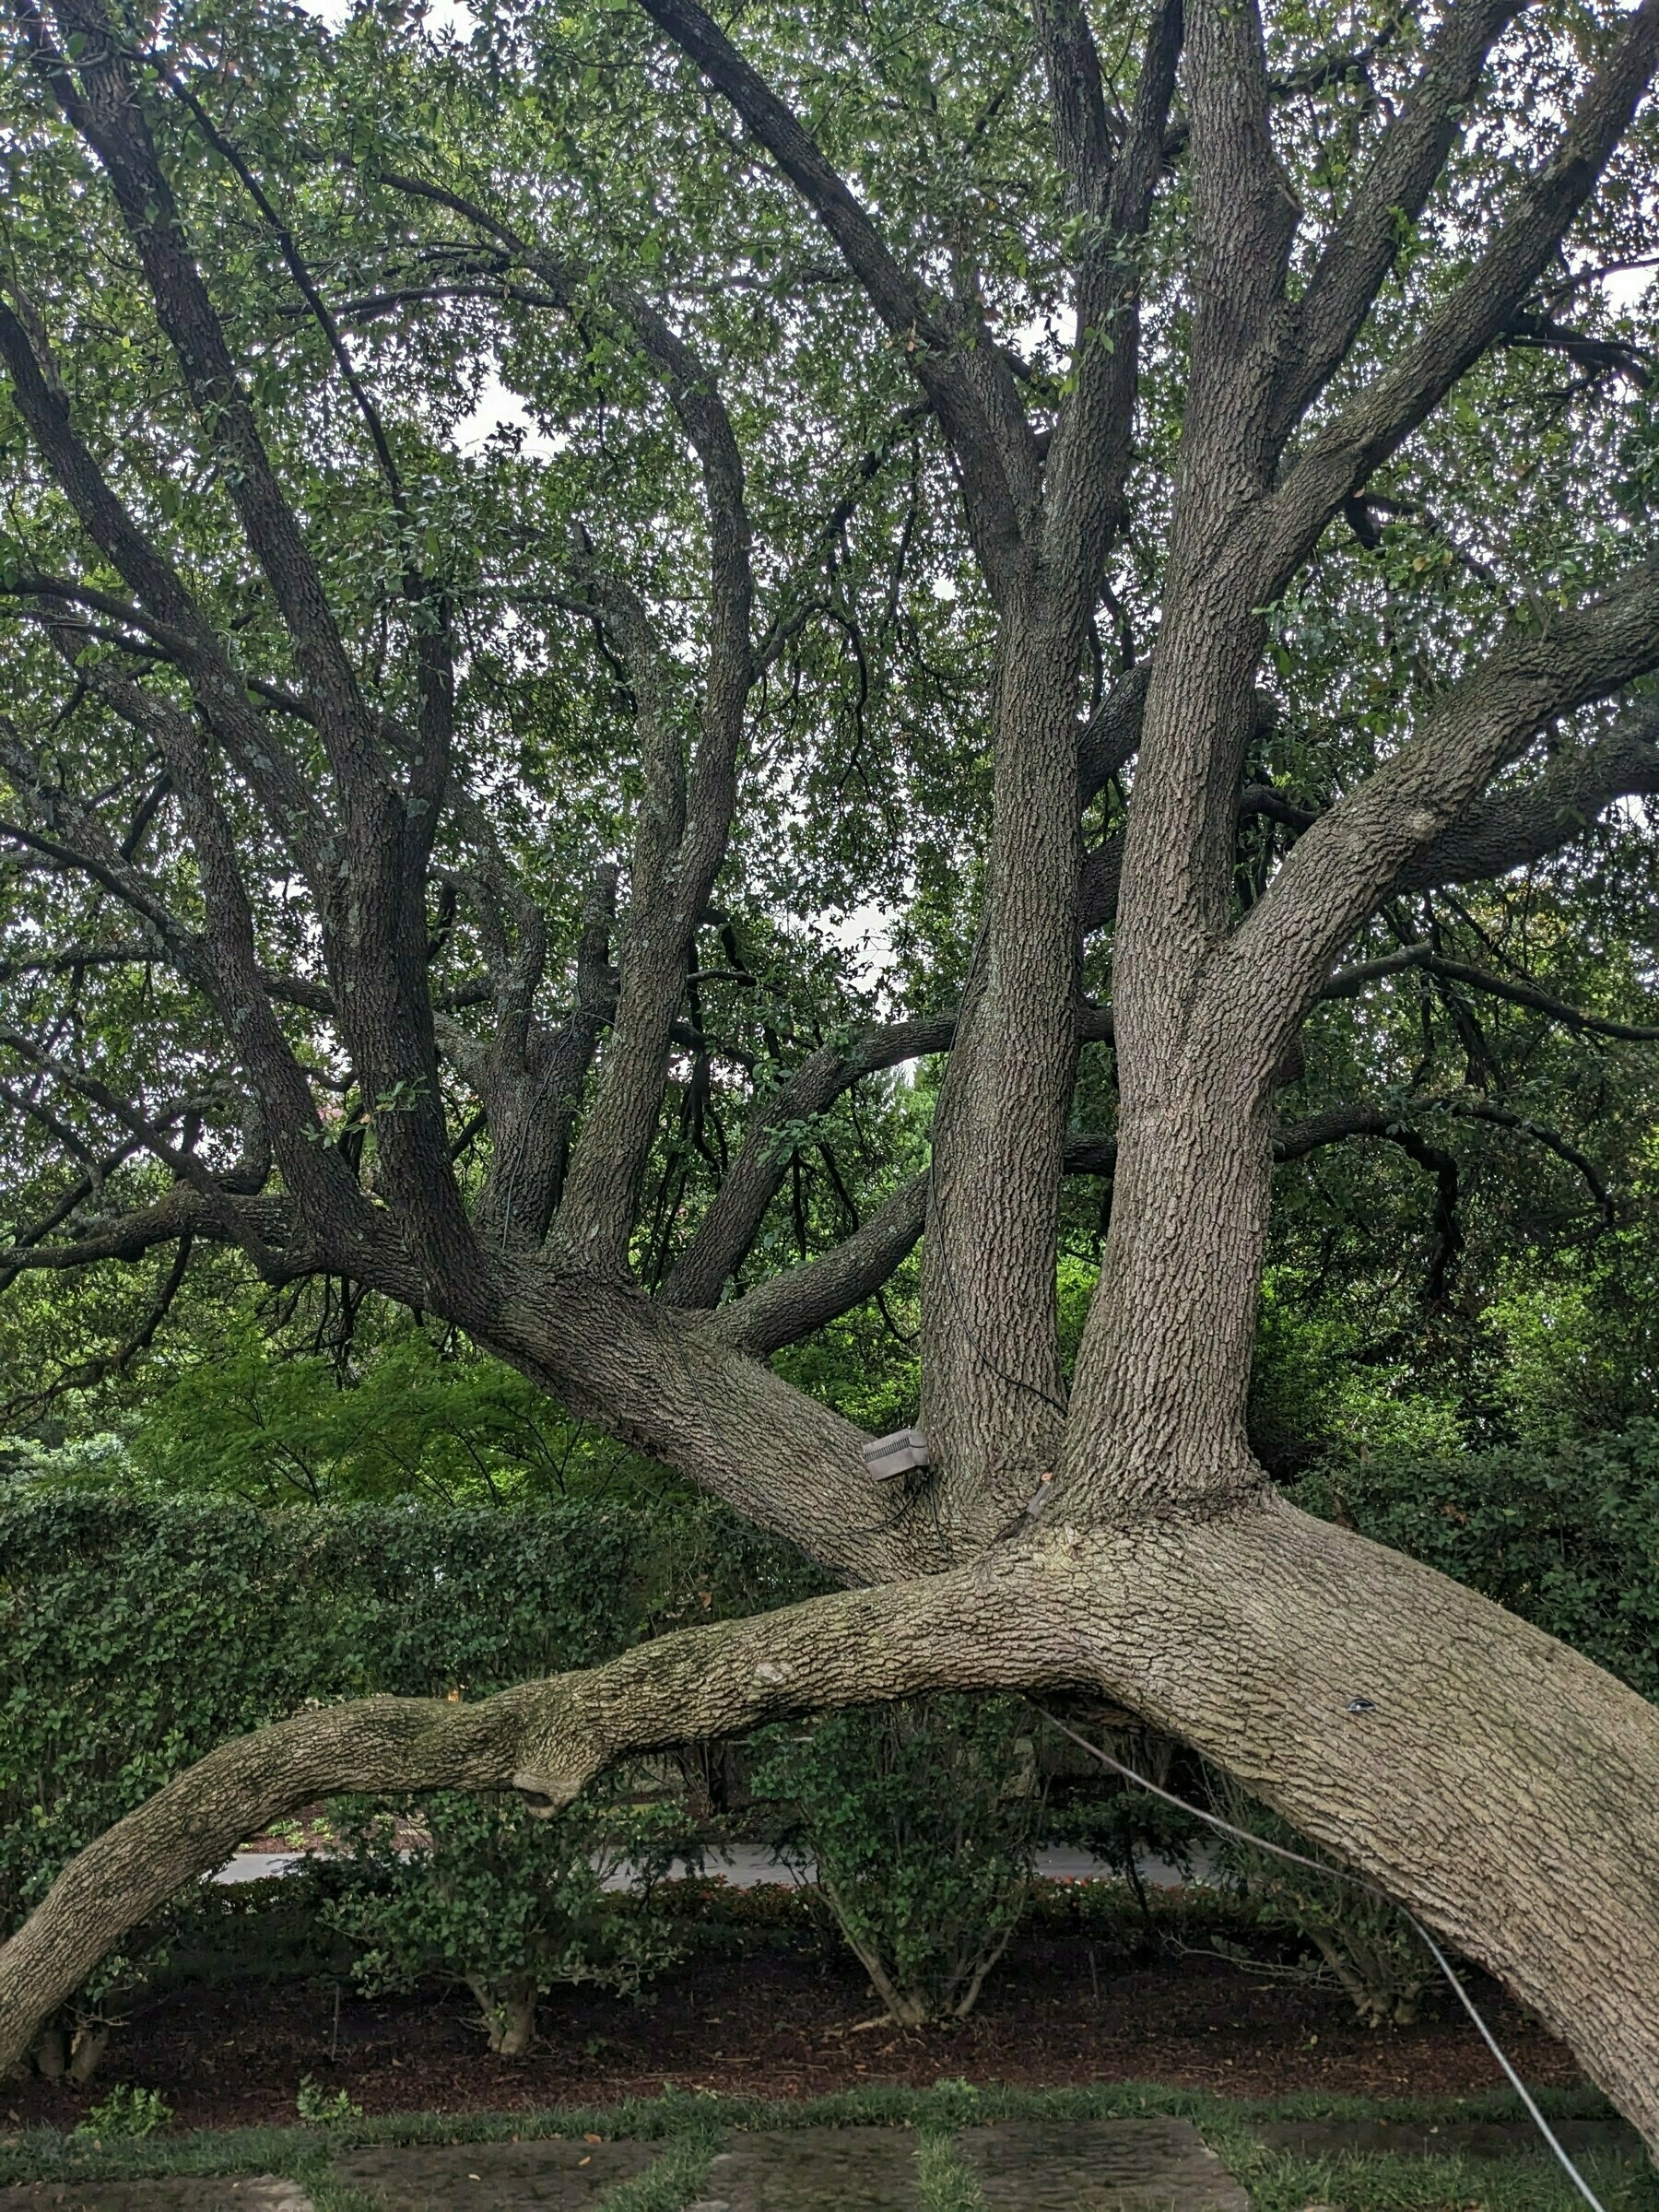 an old, gnarled live oak tree